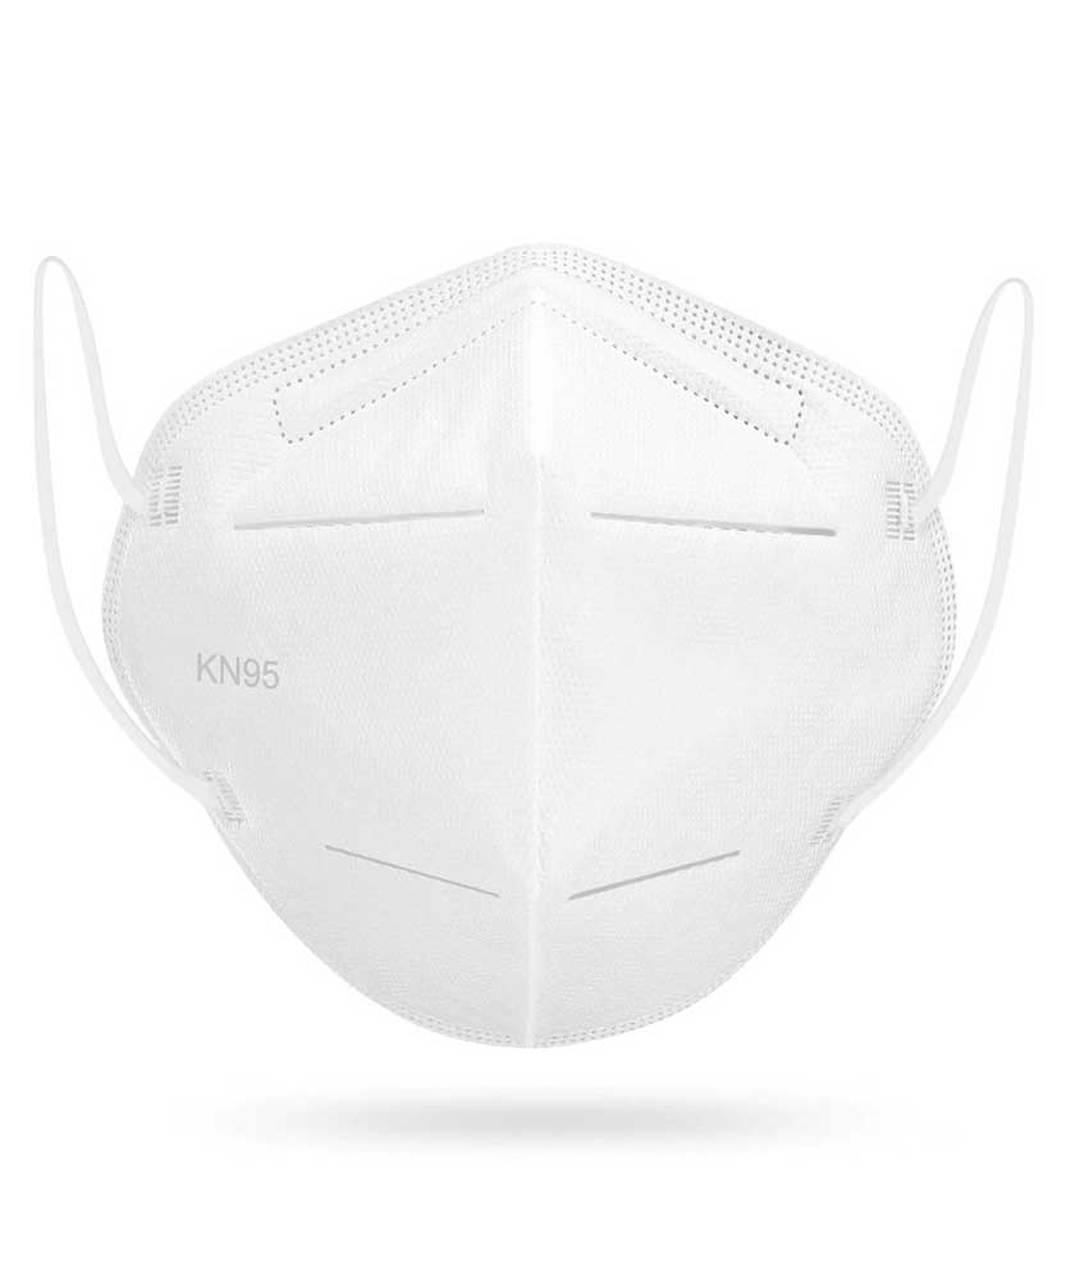 KN95 Protective Face Masks, 100 Per Case - JAD